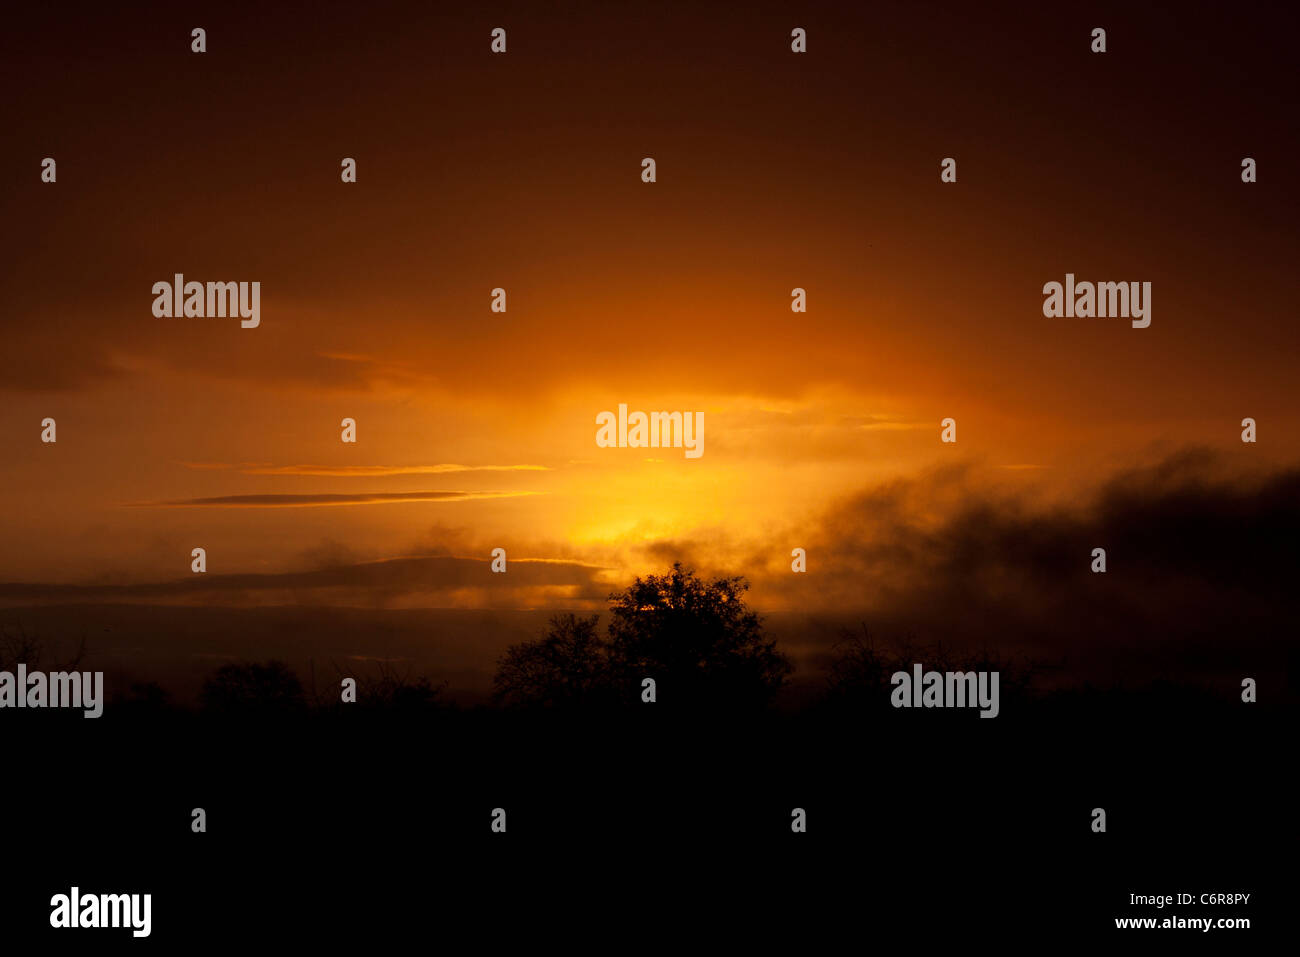 Bushveld sunset with orange sky and tree silhouette Stock Photo